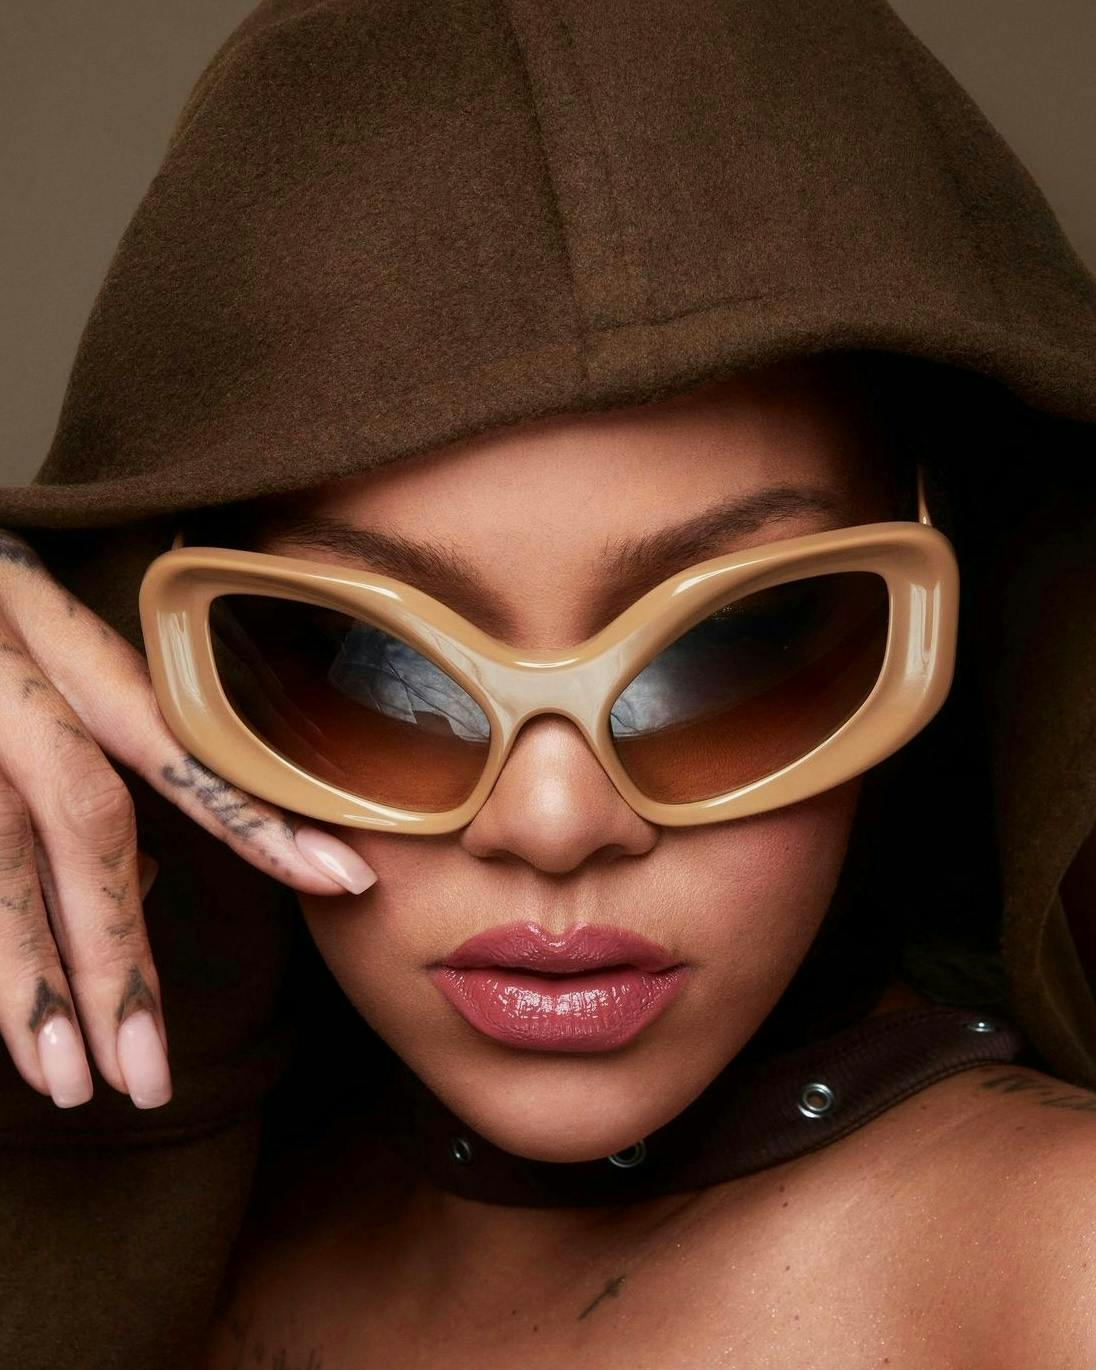 accessories sunglasses glasses face head person photography portrait lipstick smile